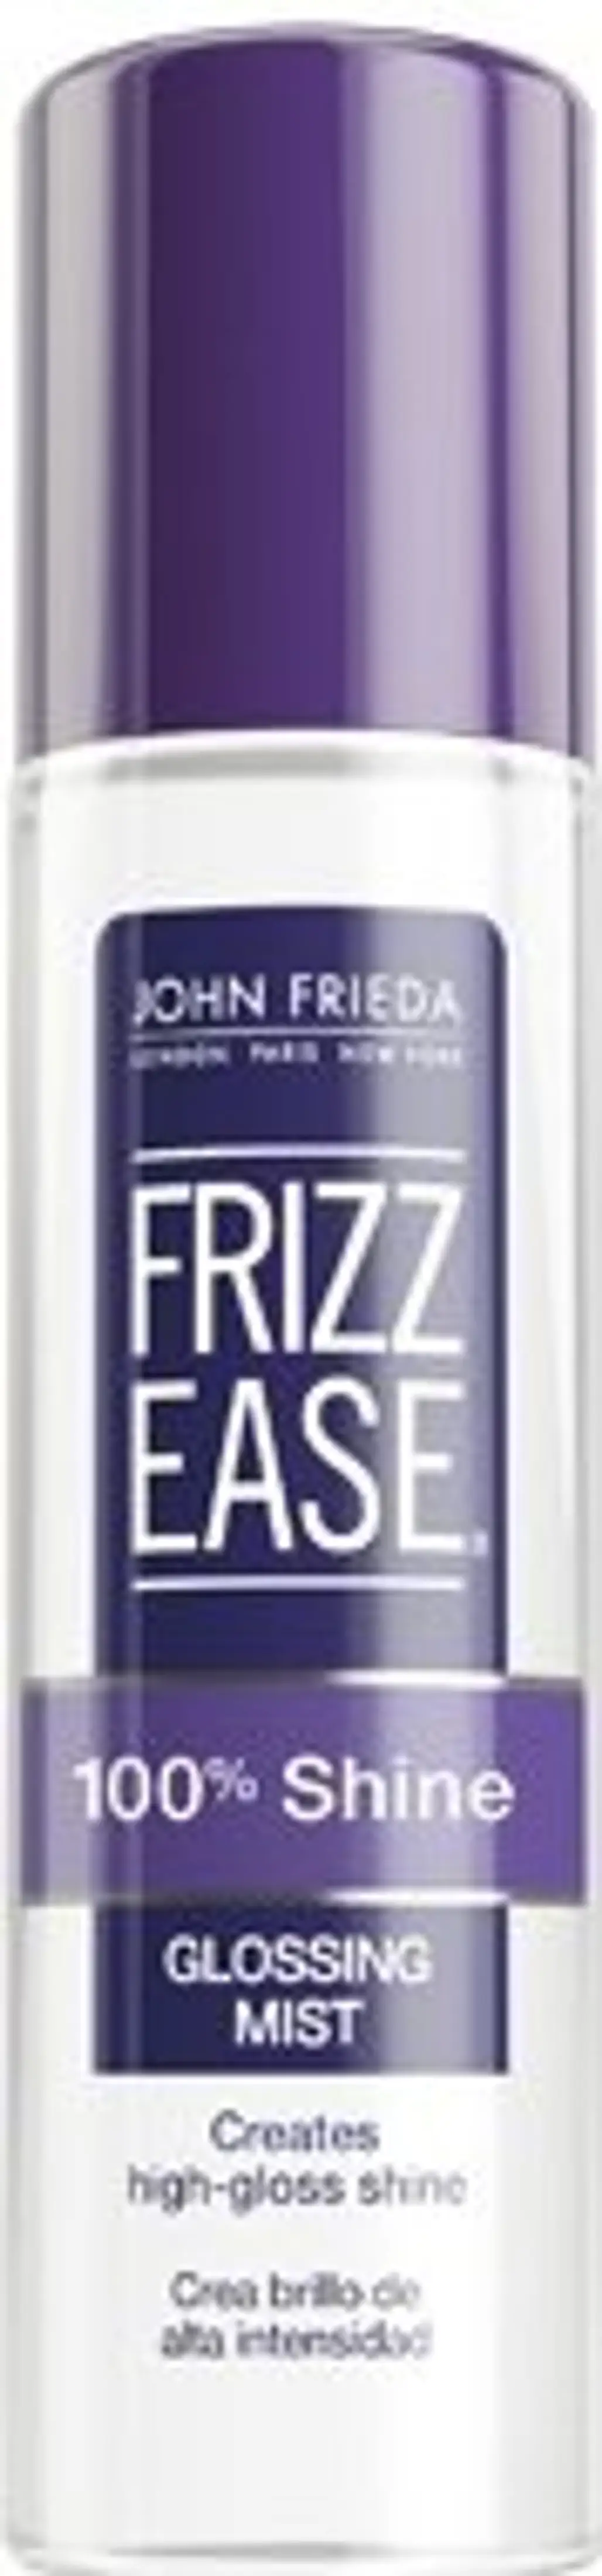 John Frieda – Frizz Ease 100% Shine Glossing Mist